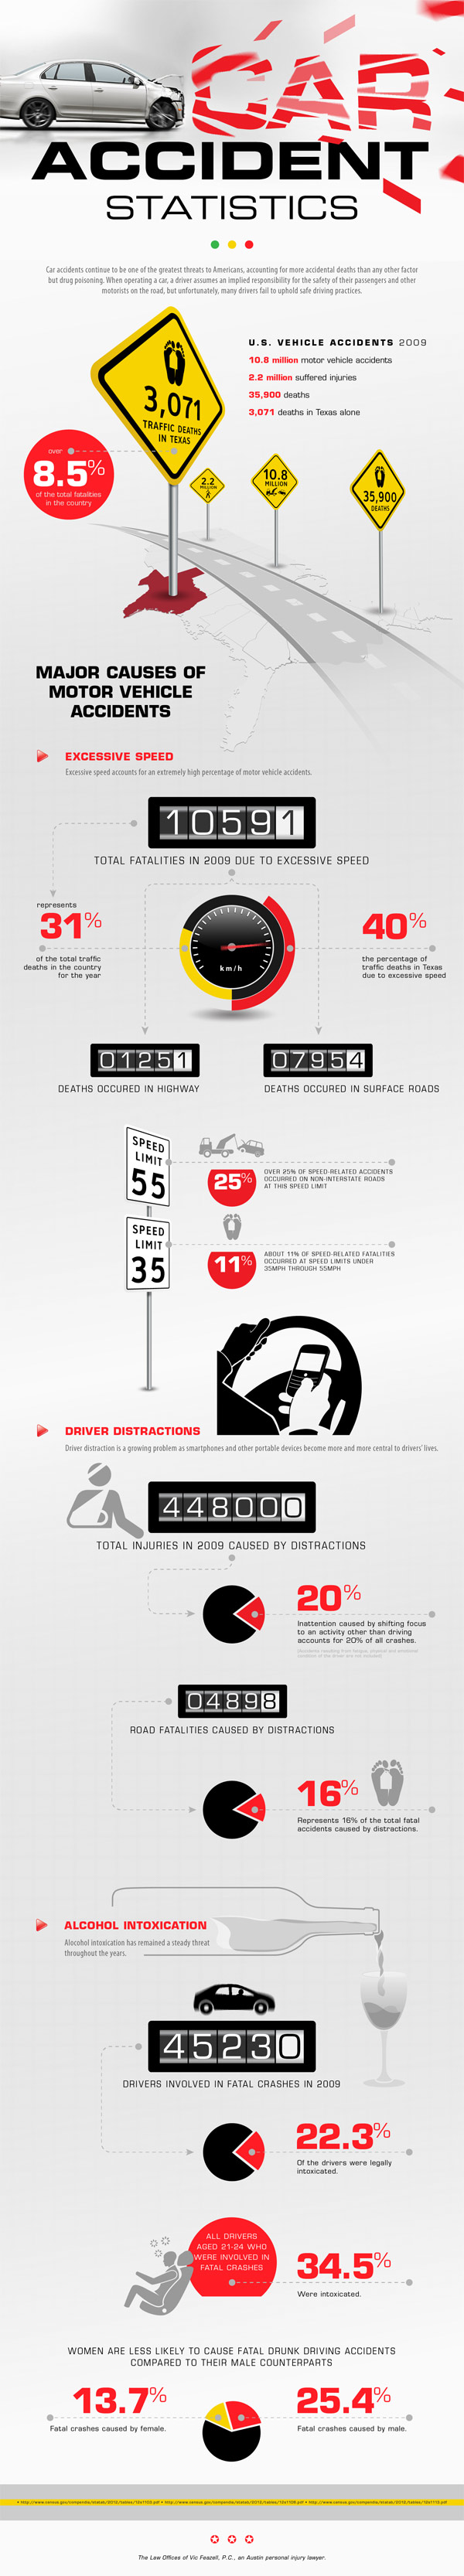 car-accident-statistics-infographic_50b5062a17a15